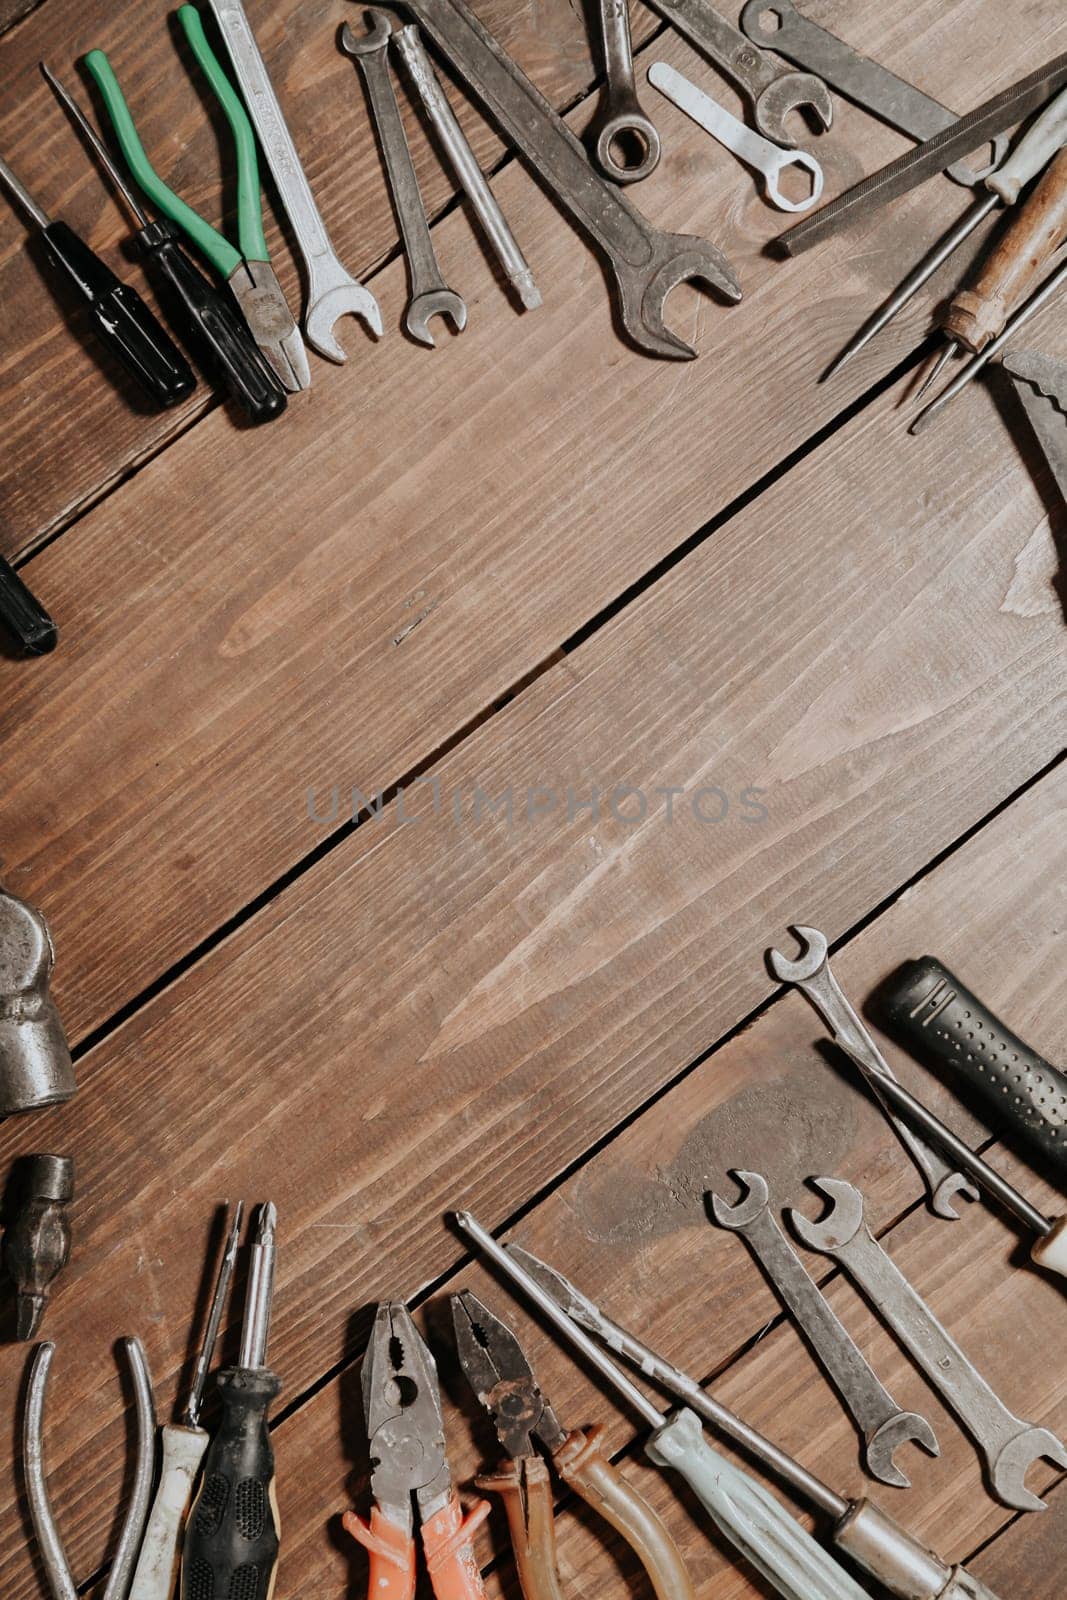 instrument for repair knives hammers keys pliers